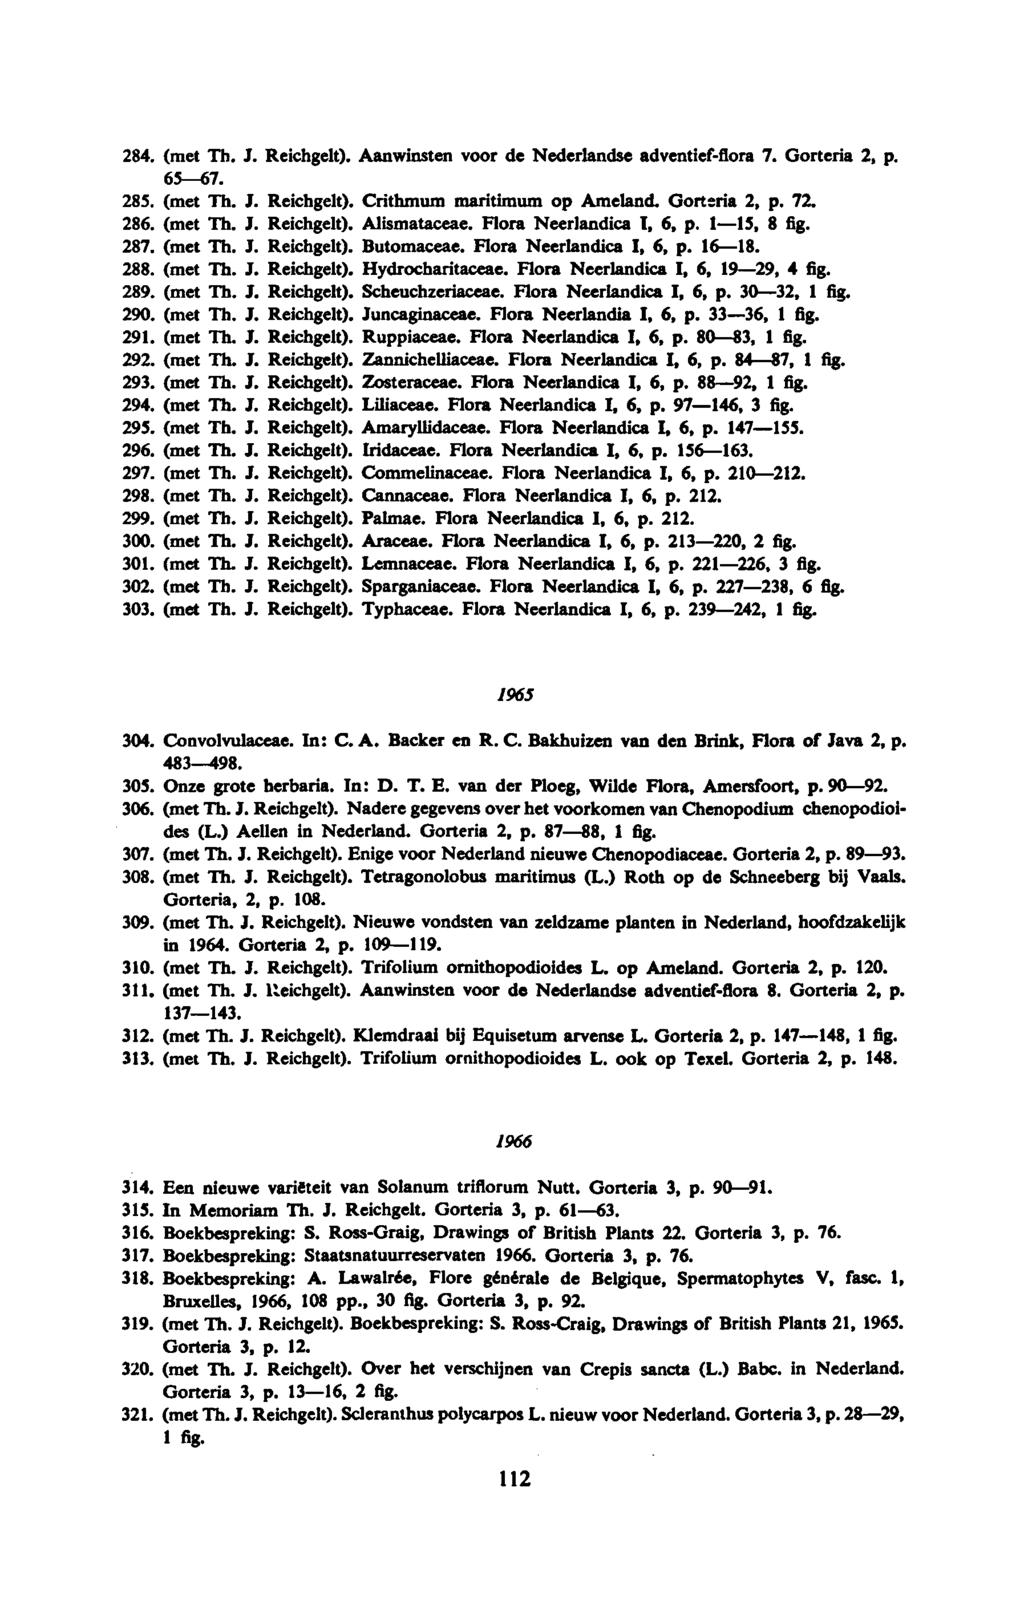 284. (met Th. J. Reichgelt). Aanwinsten voor de Nederlandse adventief-flora 7. Gorteria 2, 65 67. 285. (met Th. J. Reichgelt). Crithmum maritimum op Ameland. Gorteria 2, 72. 286. (met Th. J. Reichgelt). Alismataceae.